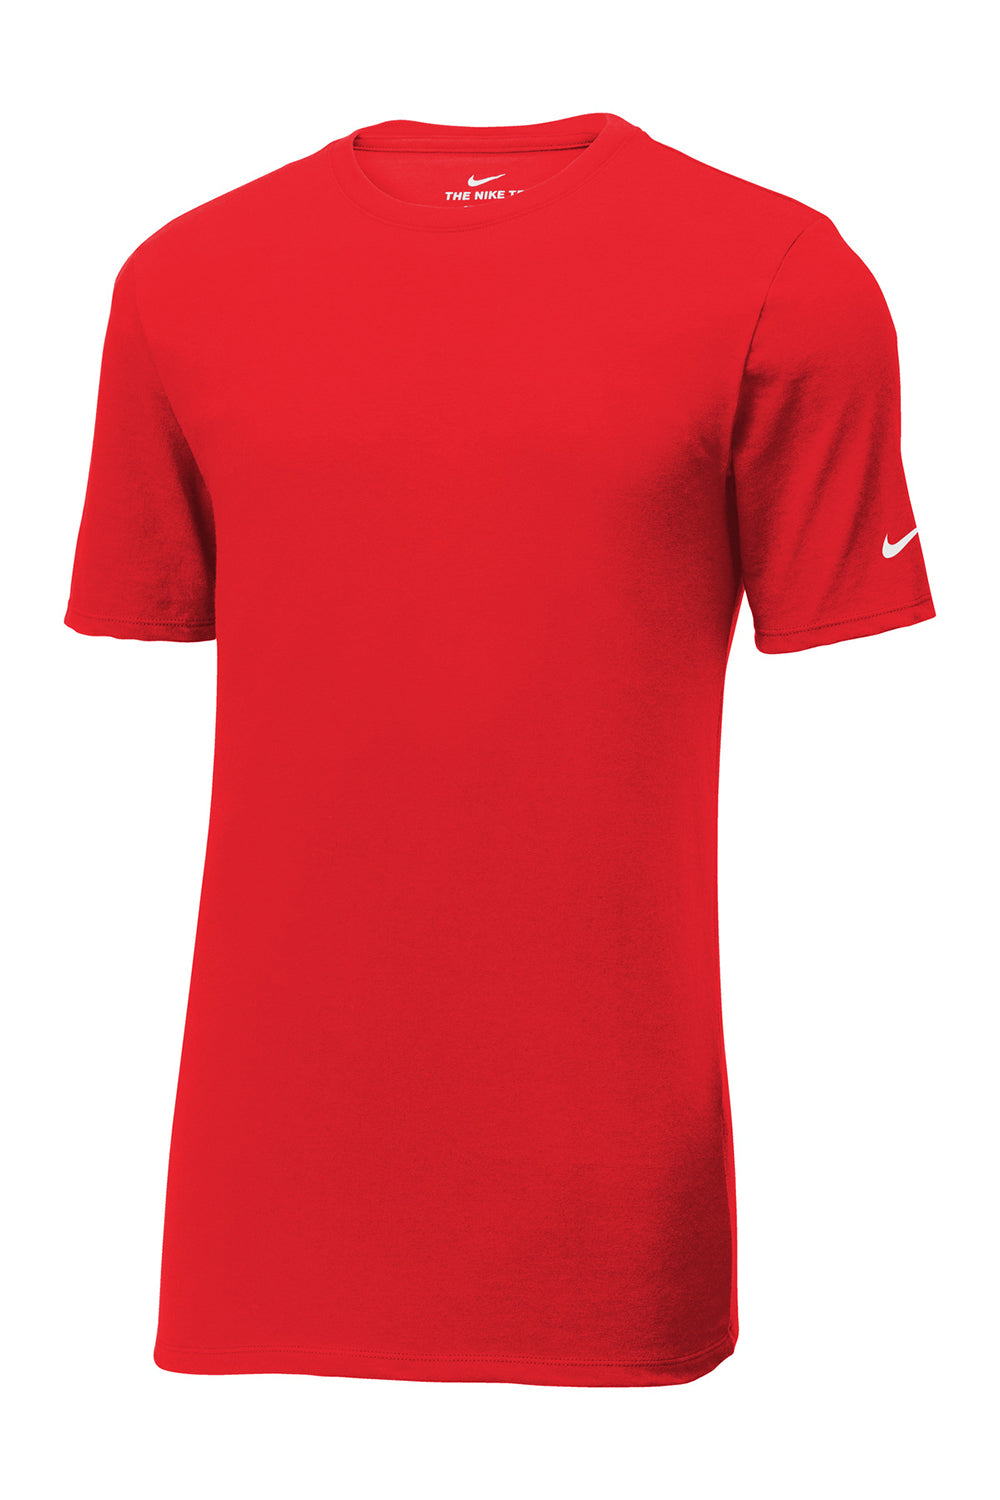 Nike NKBQ5231 Mens Dri-Fit Moisture Wicking Short Sleeve Crewneck T-Shirt University Red Flat Front